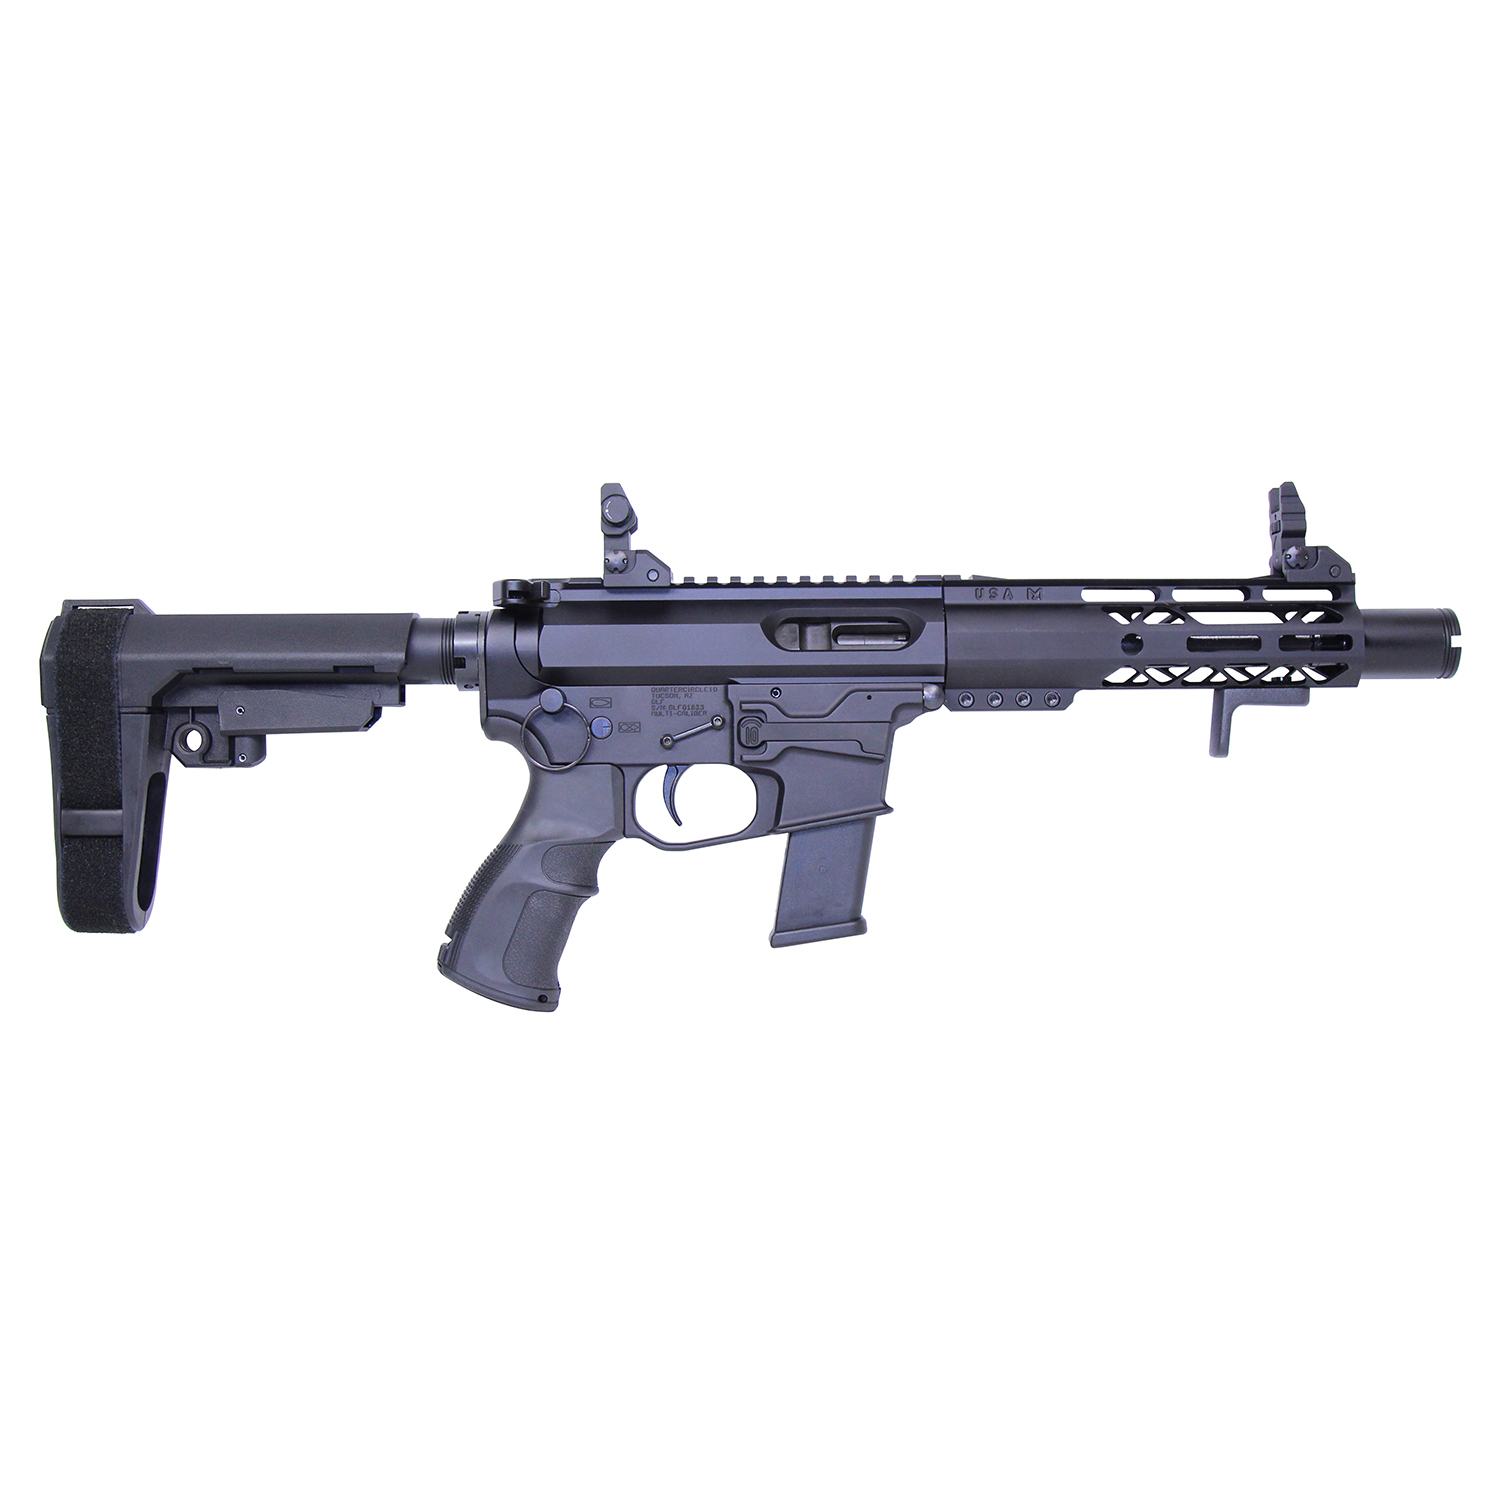 AR-15 .45 ACP: The Ultimate Rifle-Pistol Combo - News Military